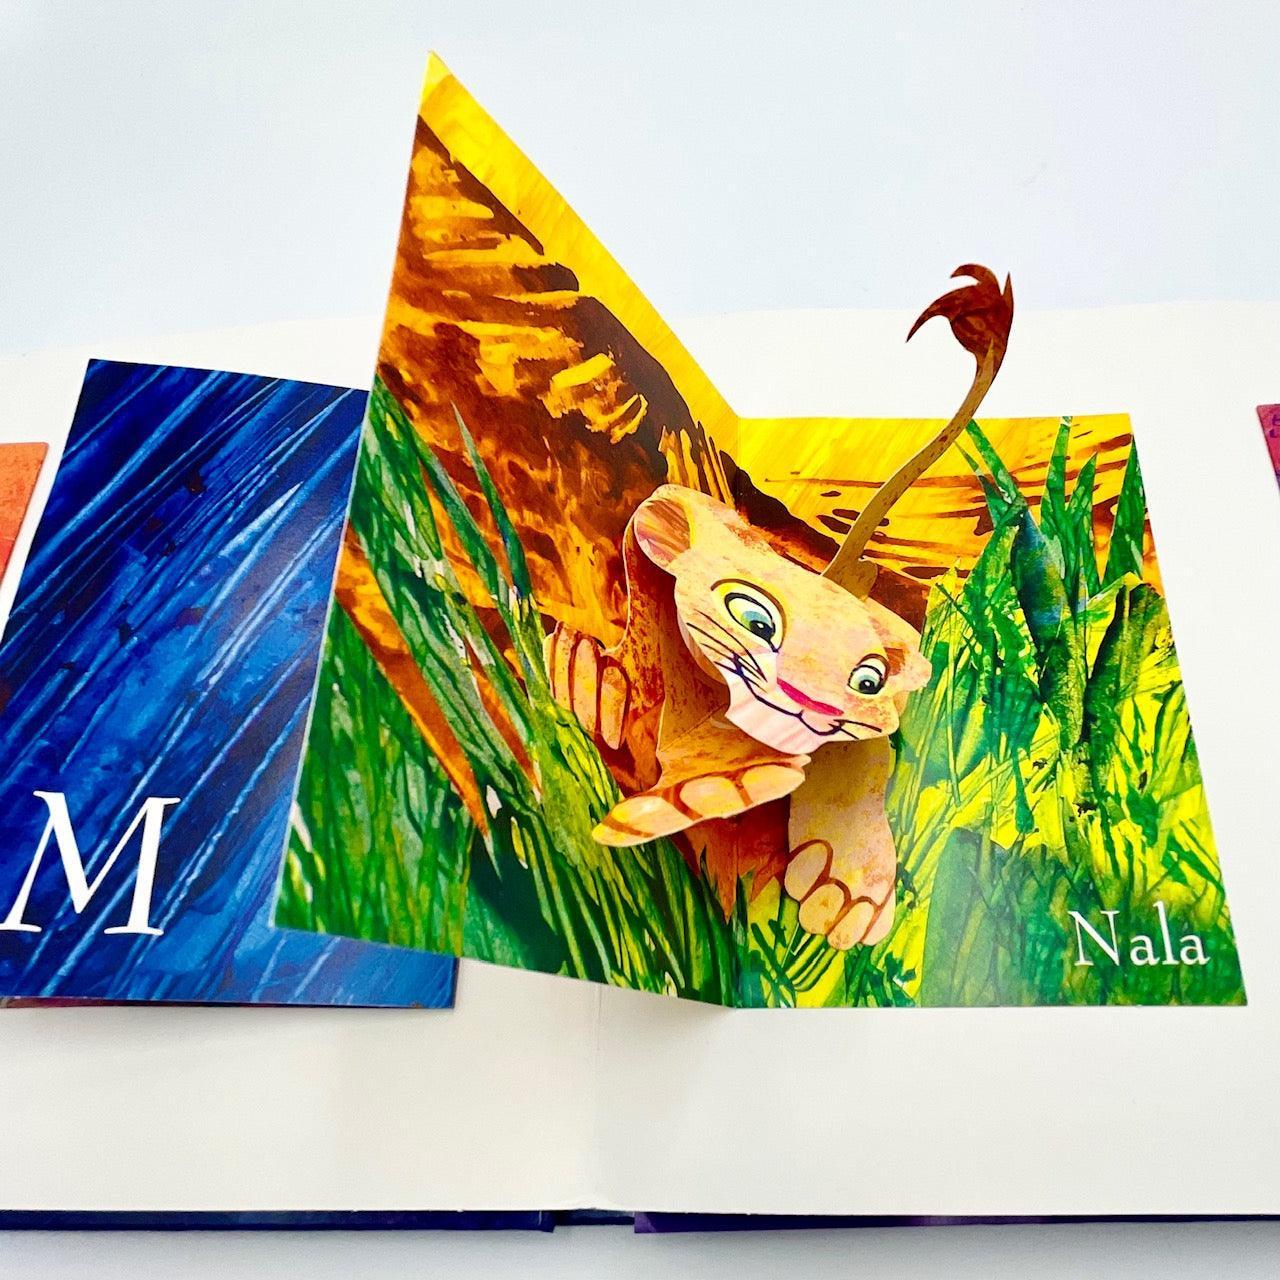 ABC Disney: An Alphabet Pop-up (signed) - Grinning Cat Books - CHILDREN'S LITERATURE - DISNEY, POPUP, SIGNED